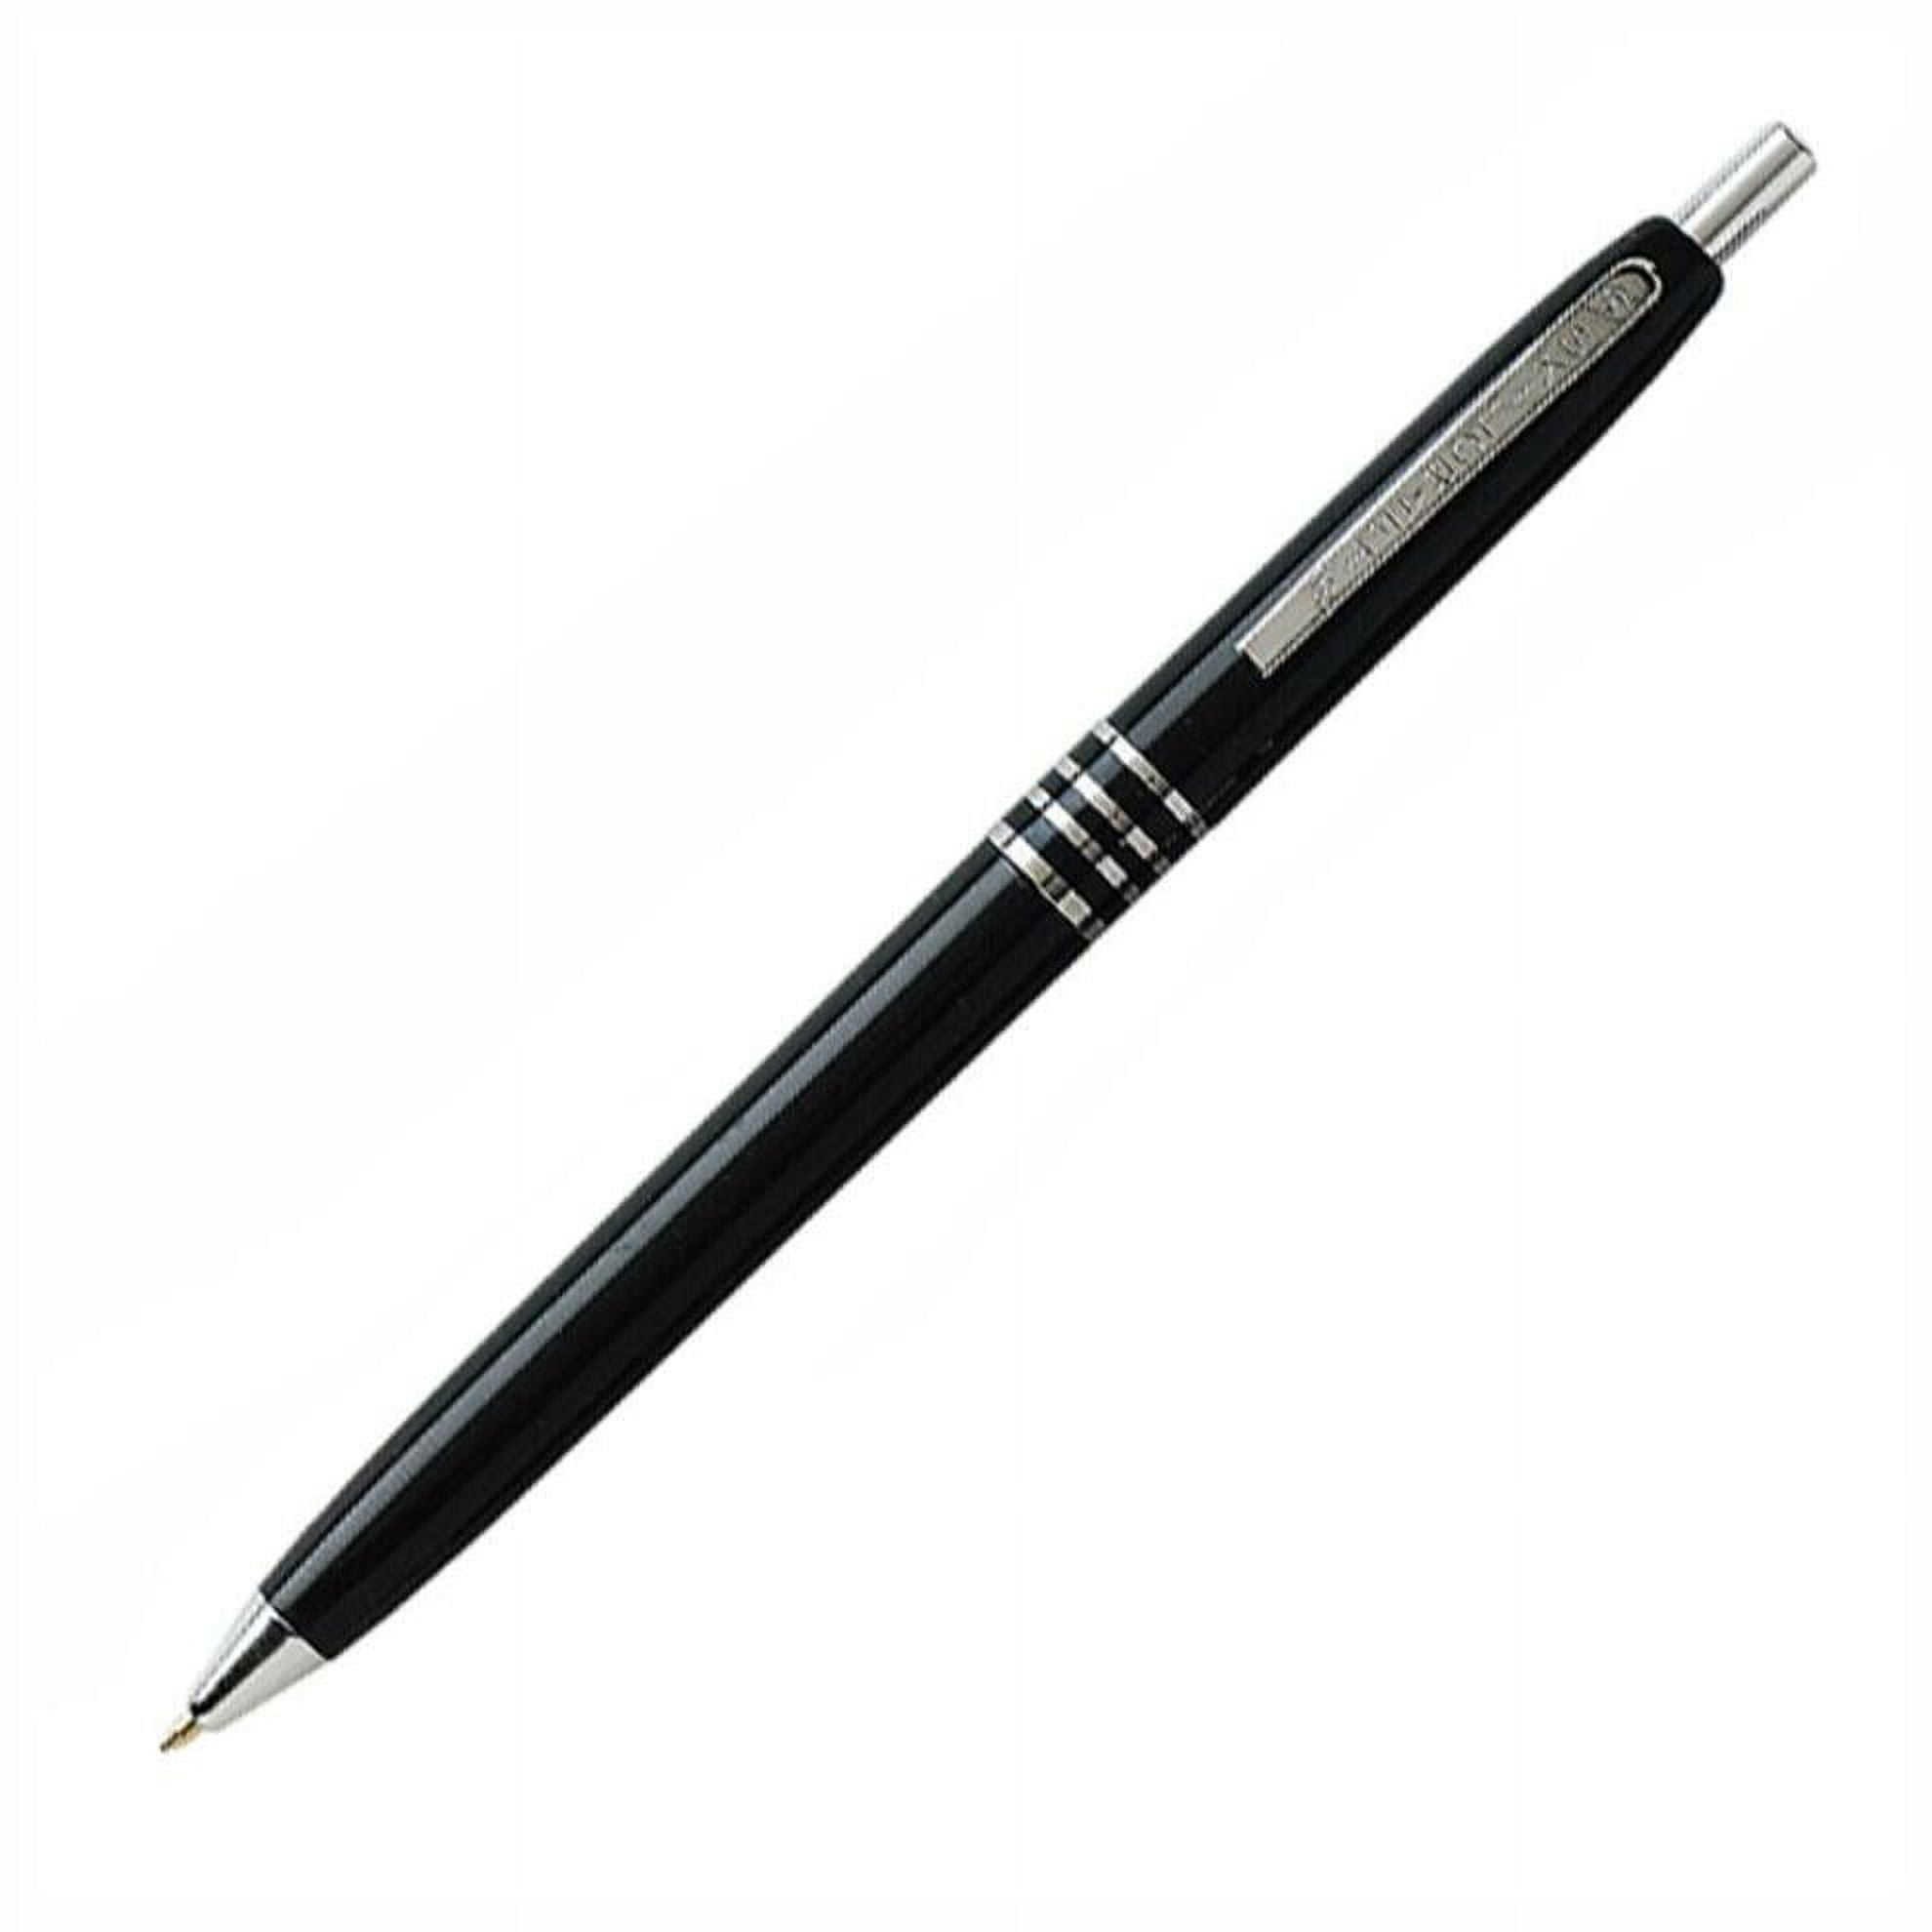 Precision Pens 5/Pkg-Basic – American Crafts